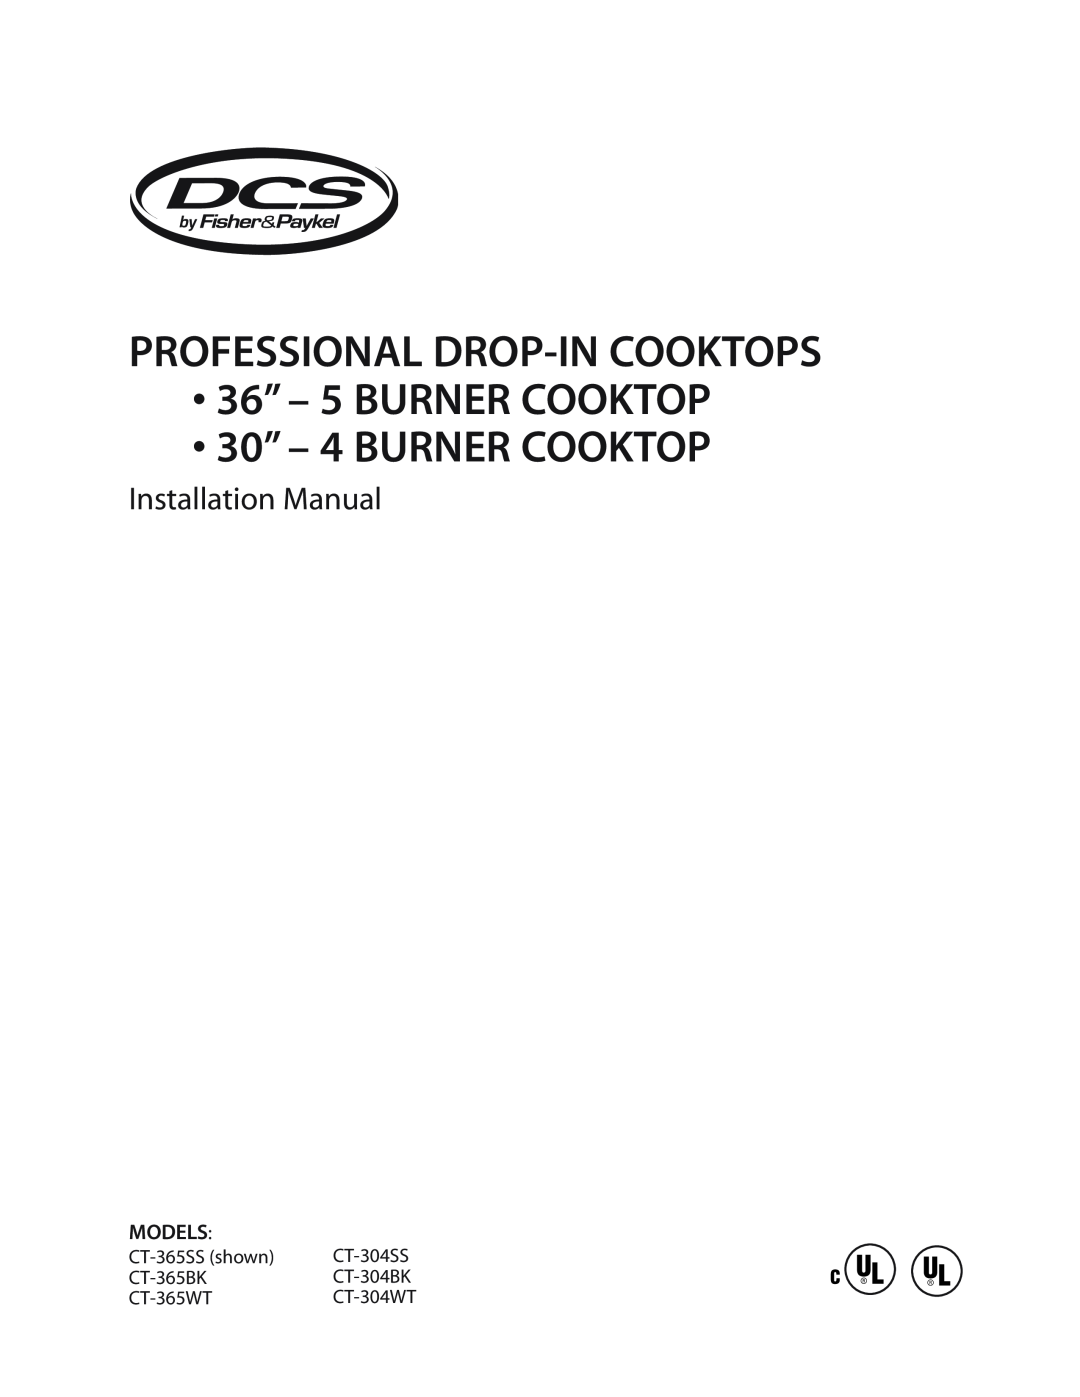 DCS CT-365SS installation manual PROFESSIONAL DROP-IN COOKTOPS 36” - 5 BURNER COOKTOP, 30” - 4 BURNER COOKTOP, Models 